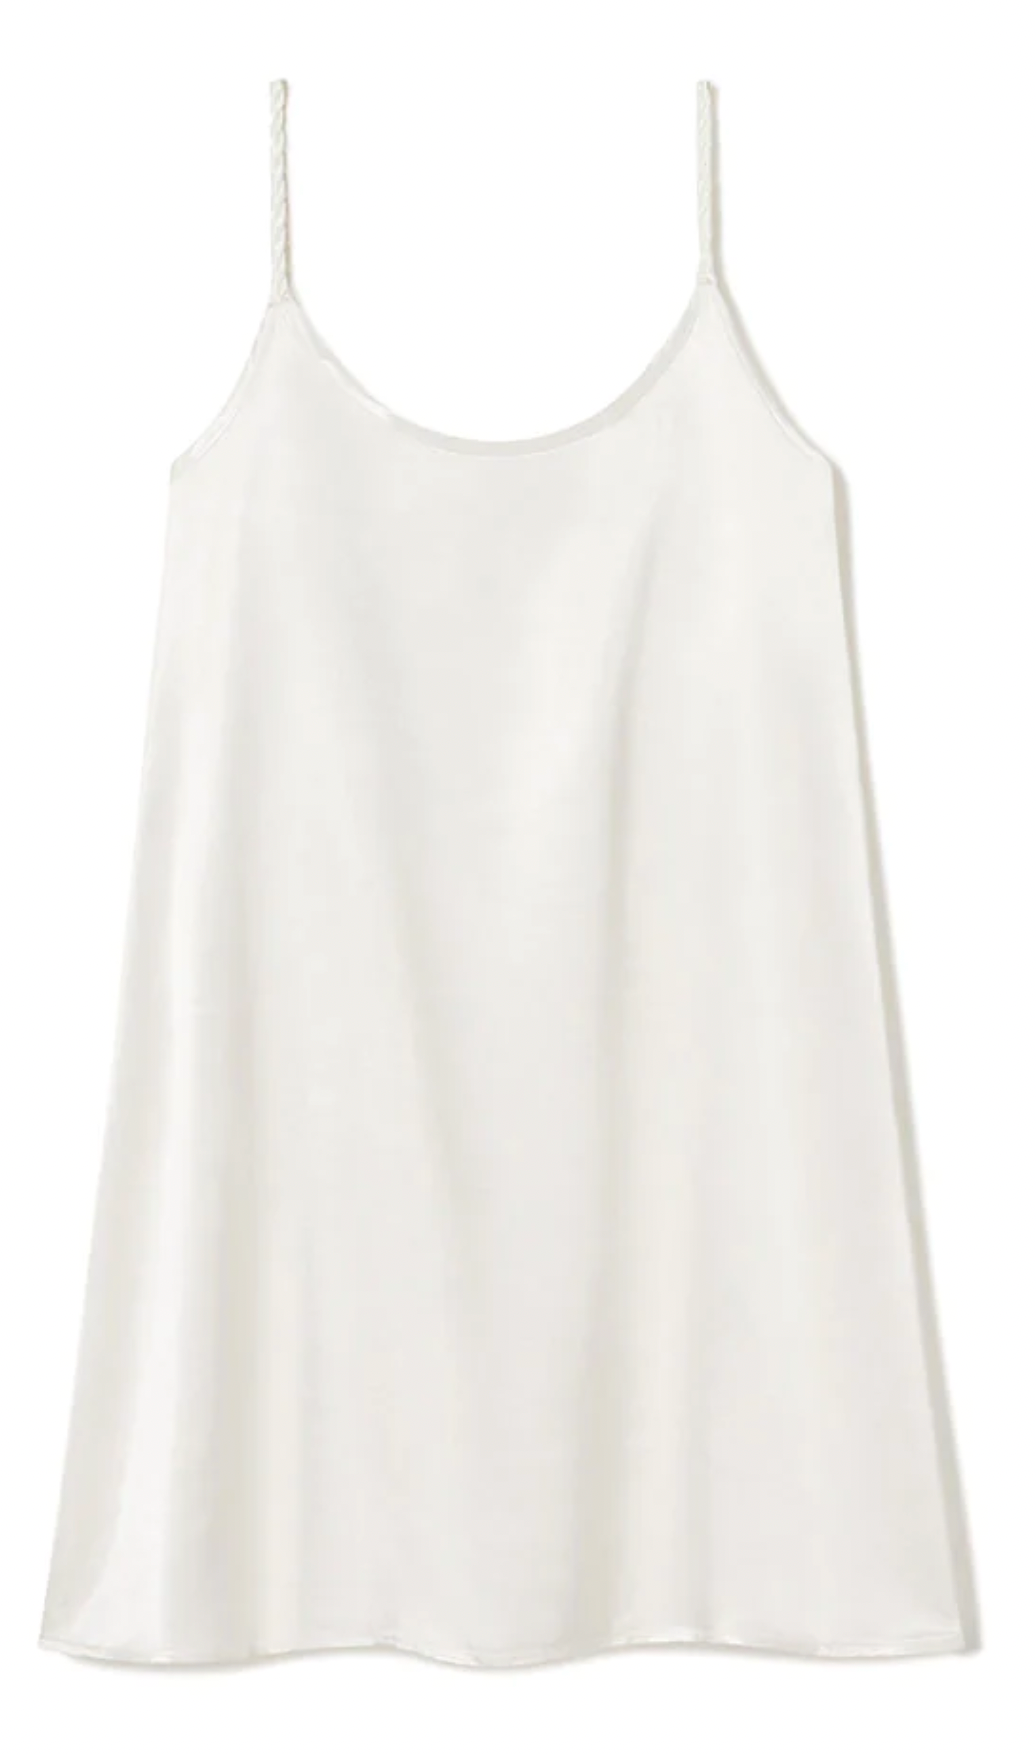 Pj Dreamwear Rowen Satin Nightgown With Braided Strap - Pearl